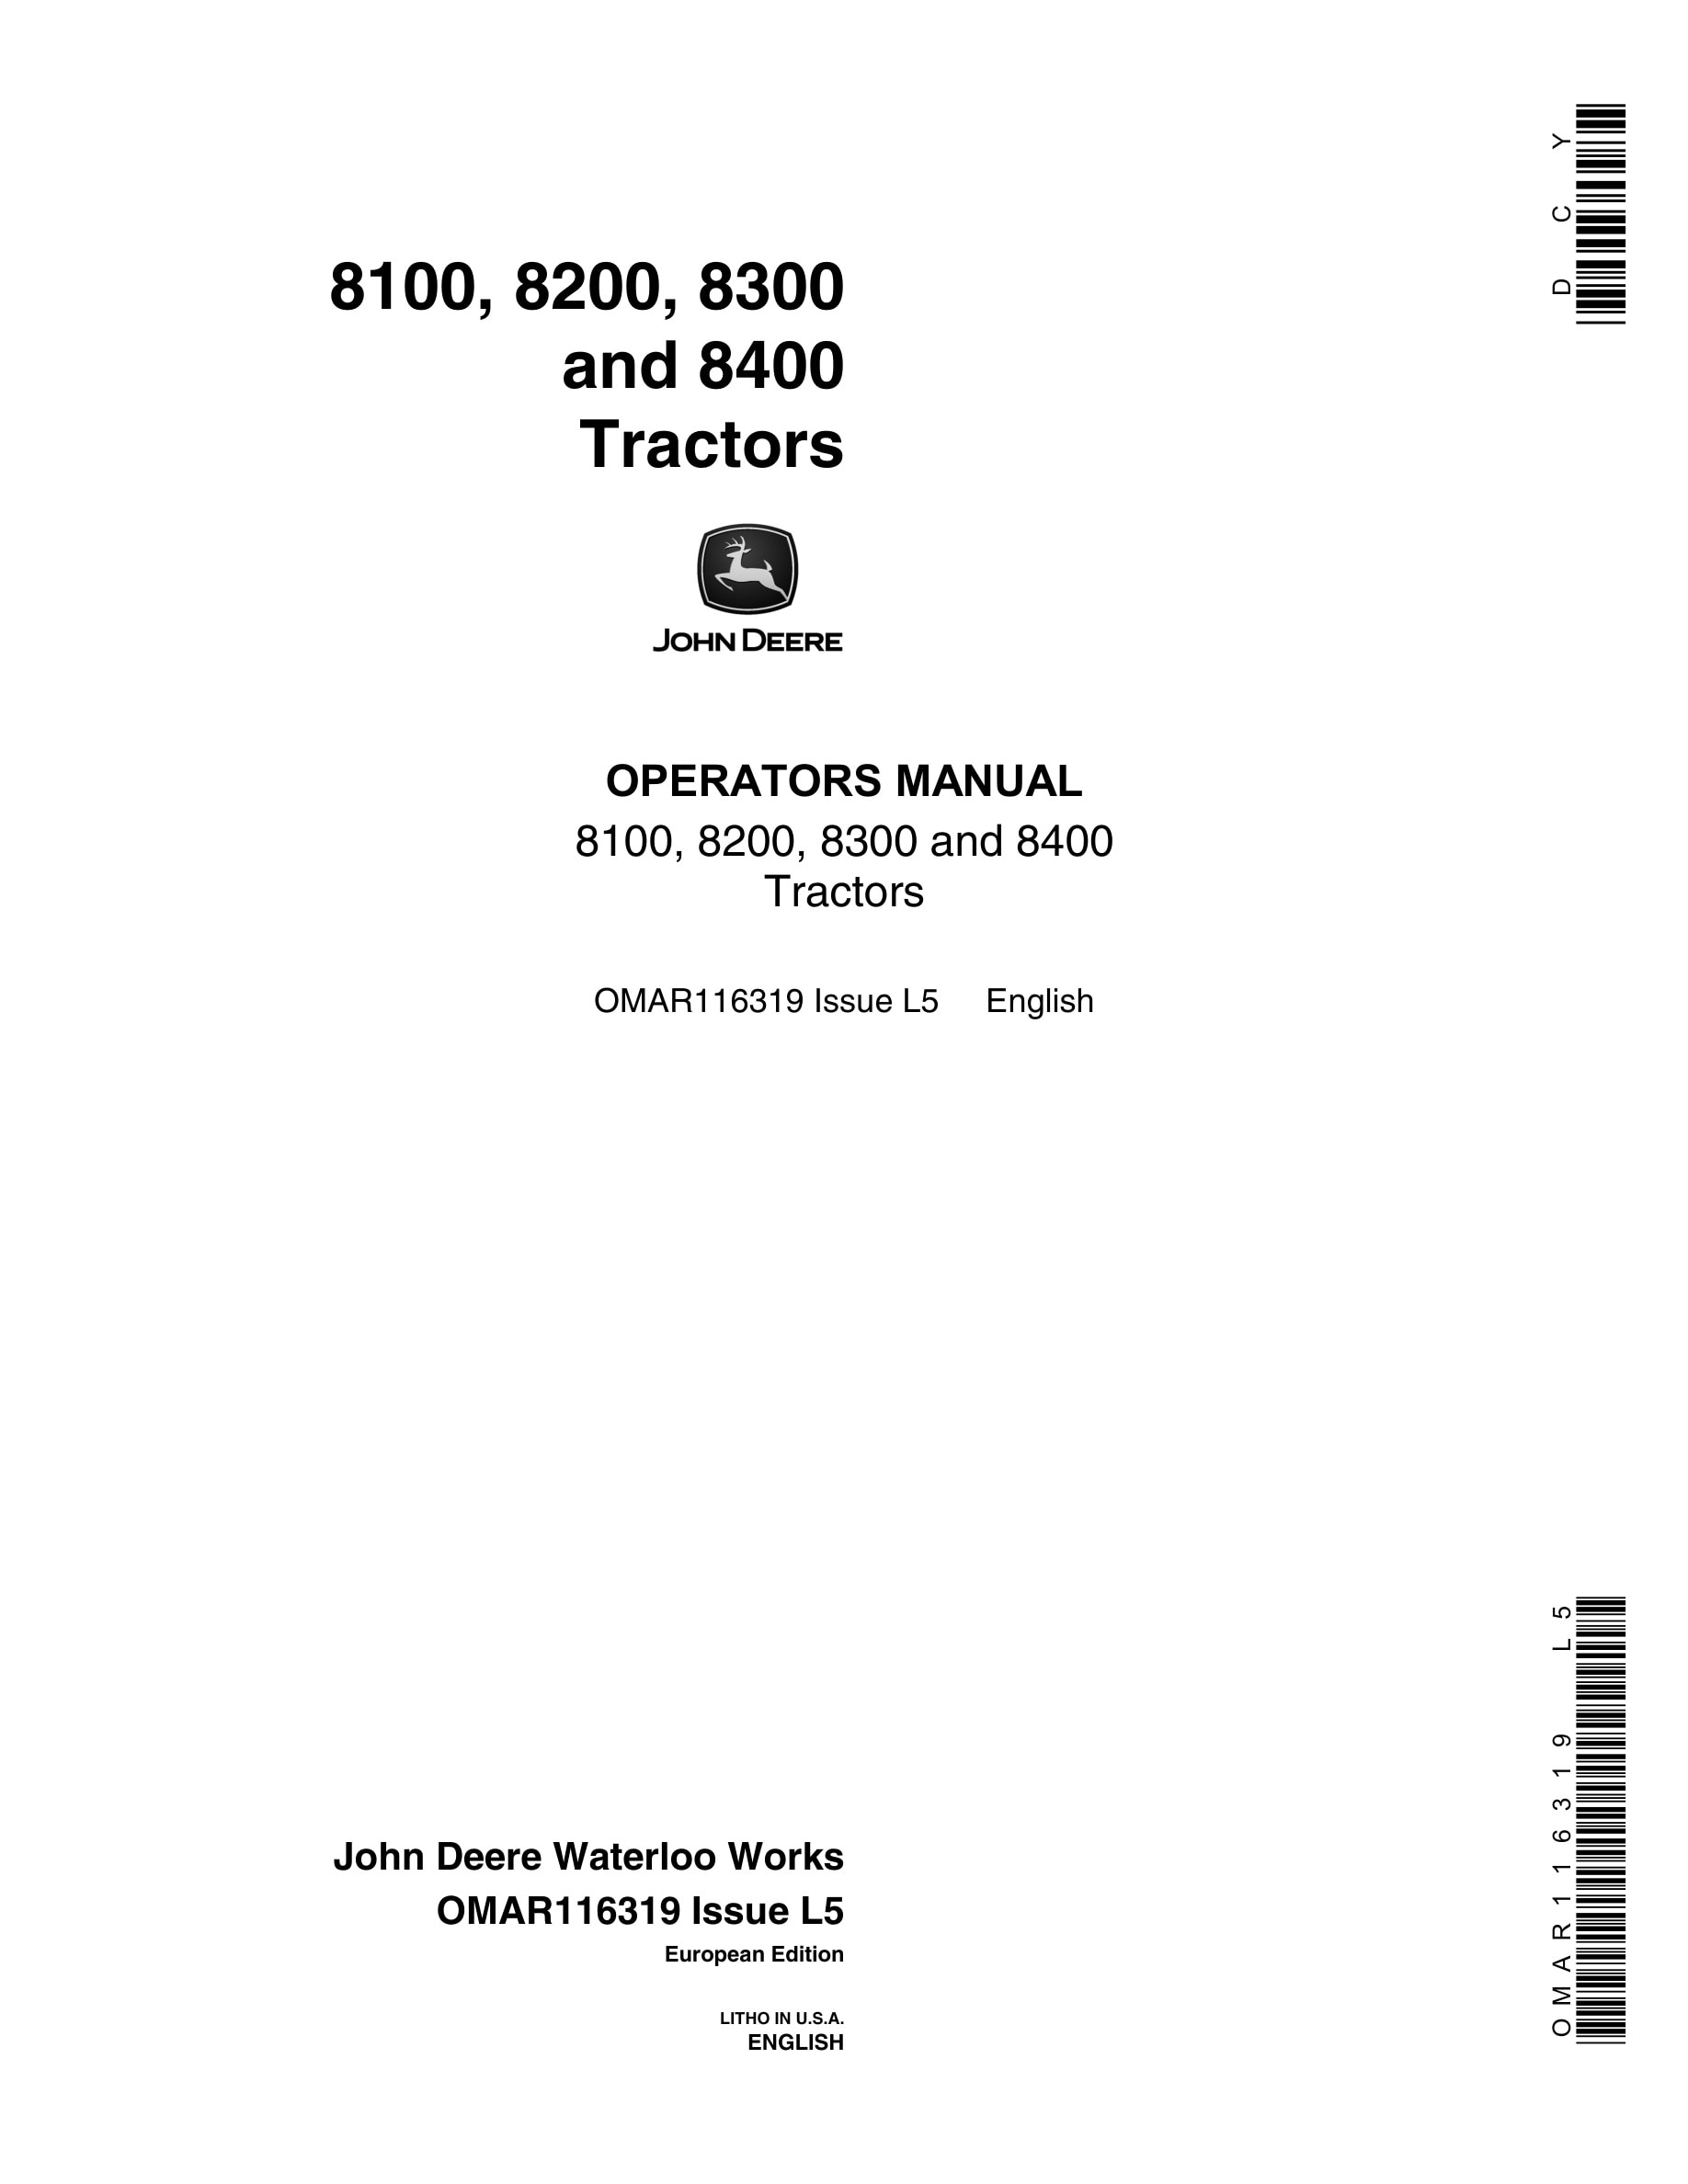 John Deere 8100, 8200, 8300 And 8400 Tractors Operator Manuals OMAR116319-1